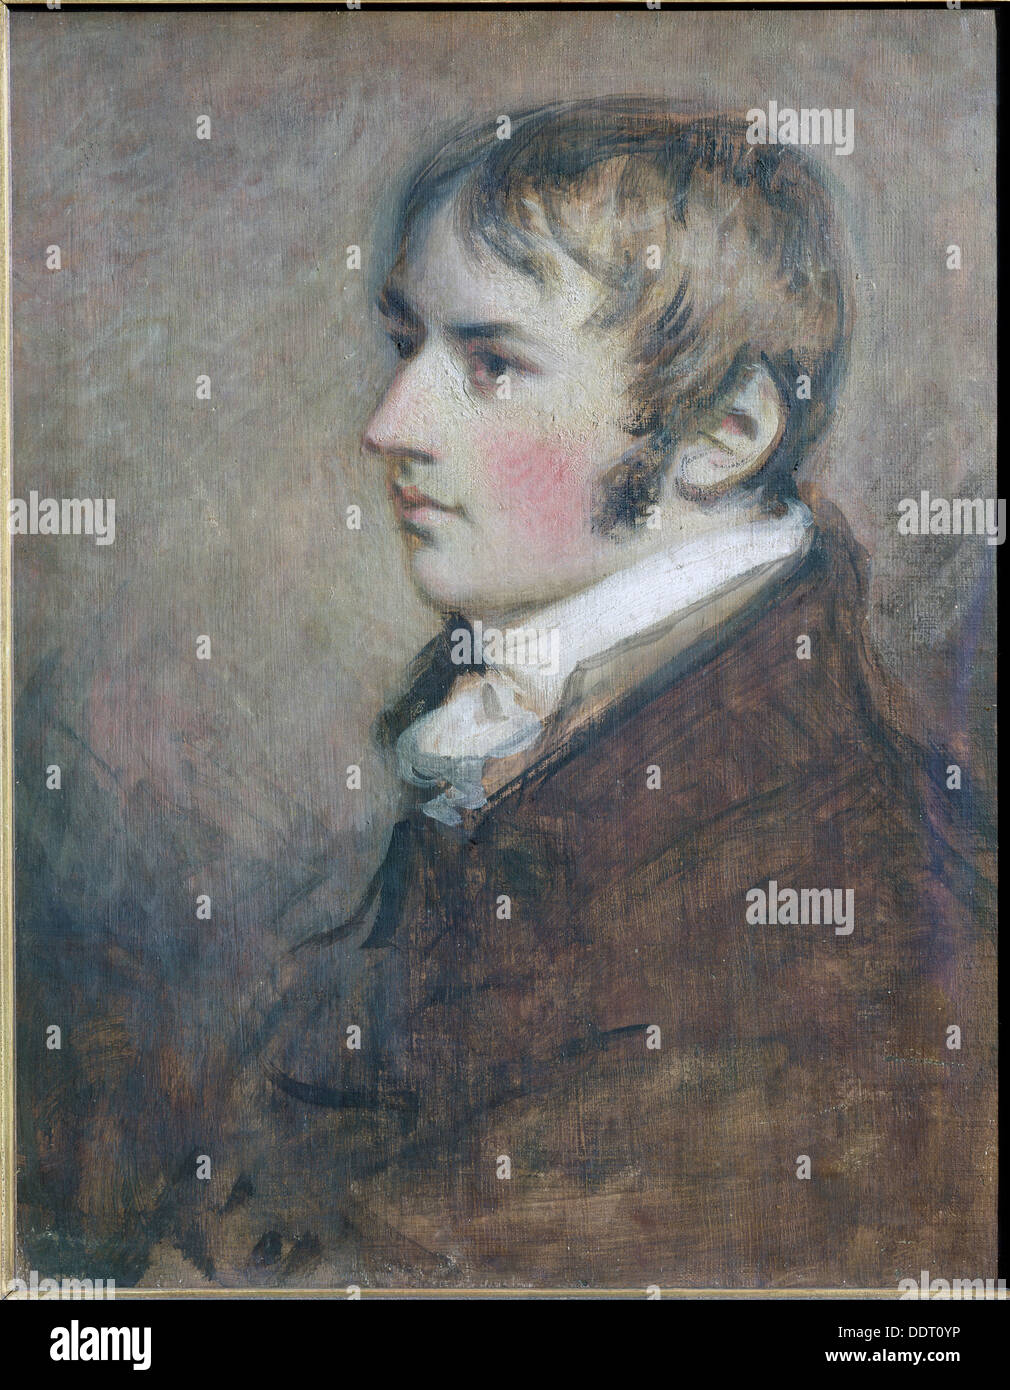 John Constable, inglese pittore paesaggista, 1796. Artista: Daniel Gardner Foto Stock